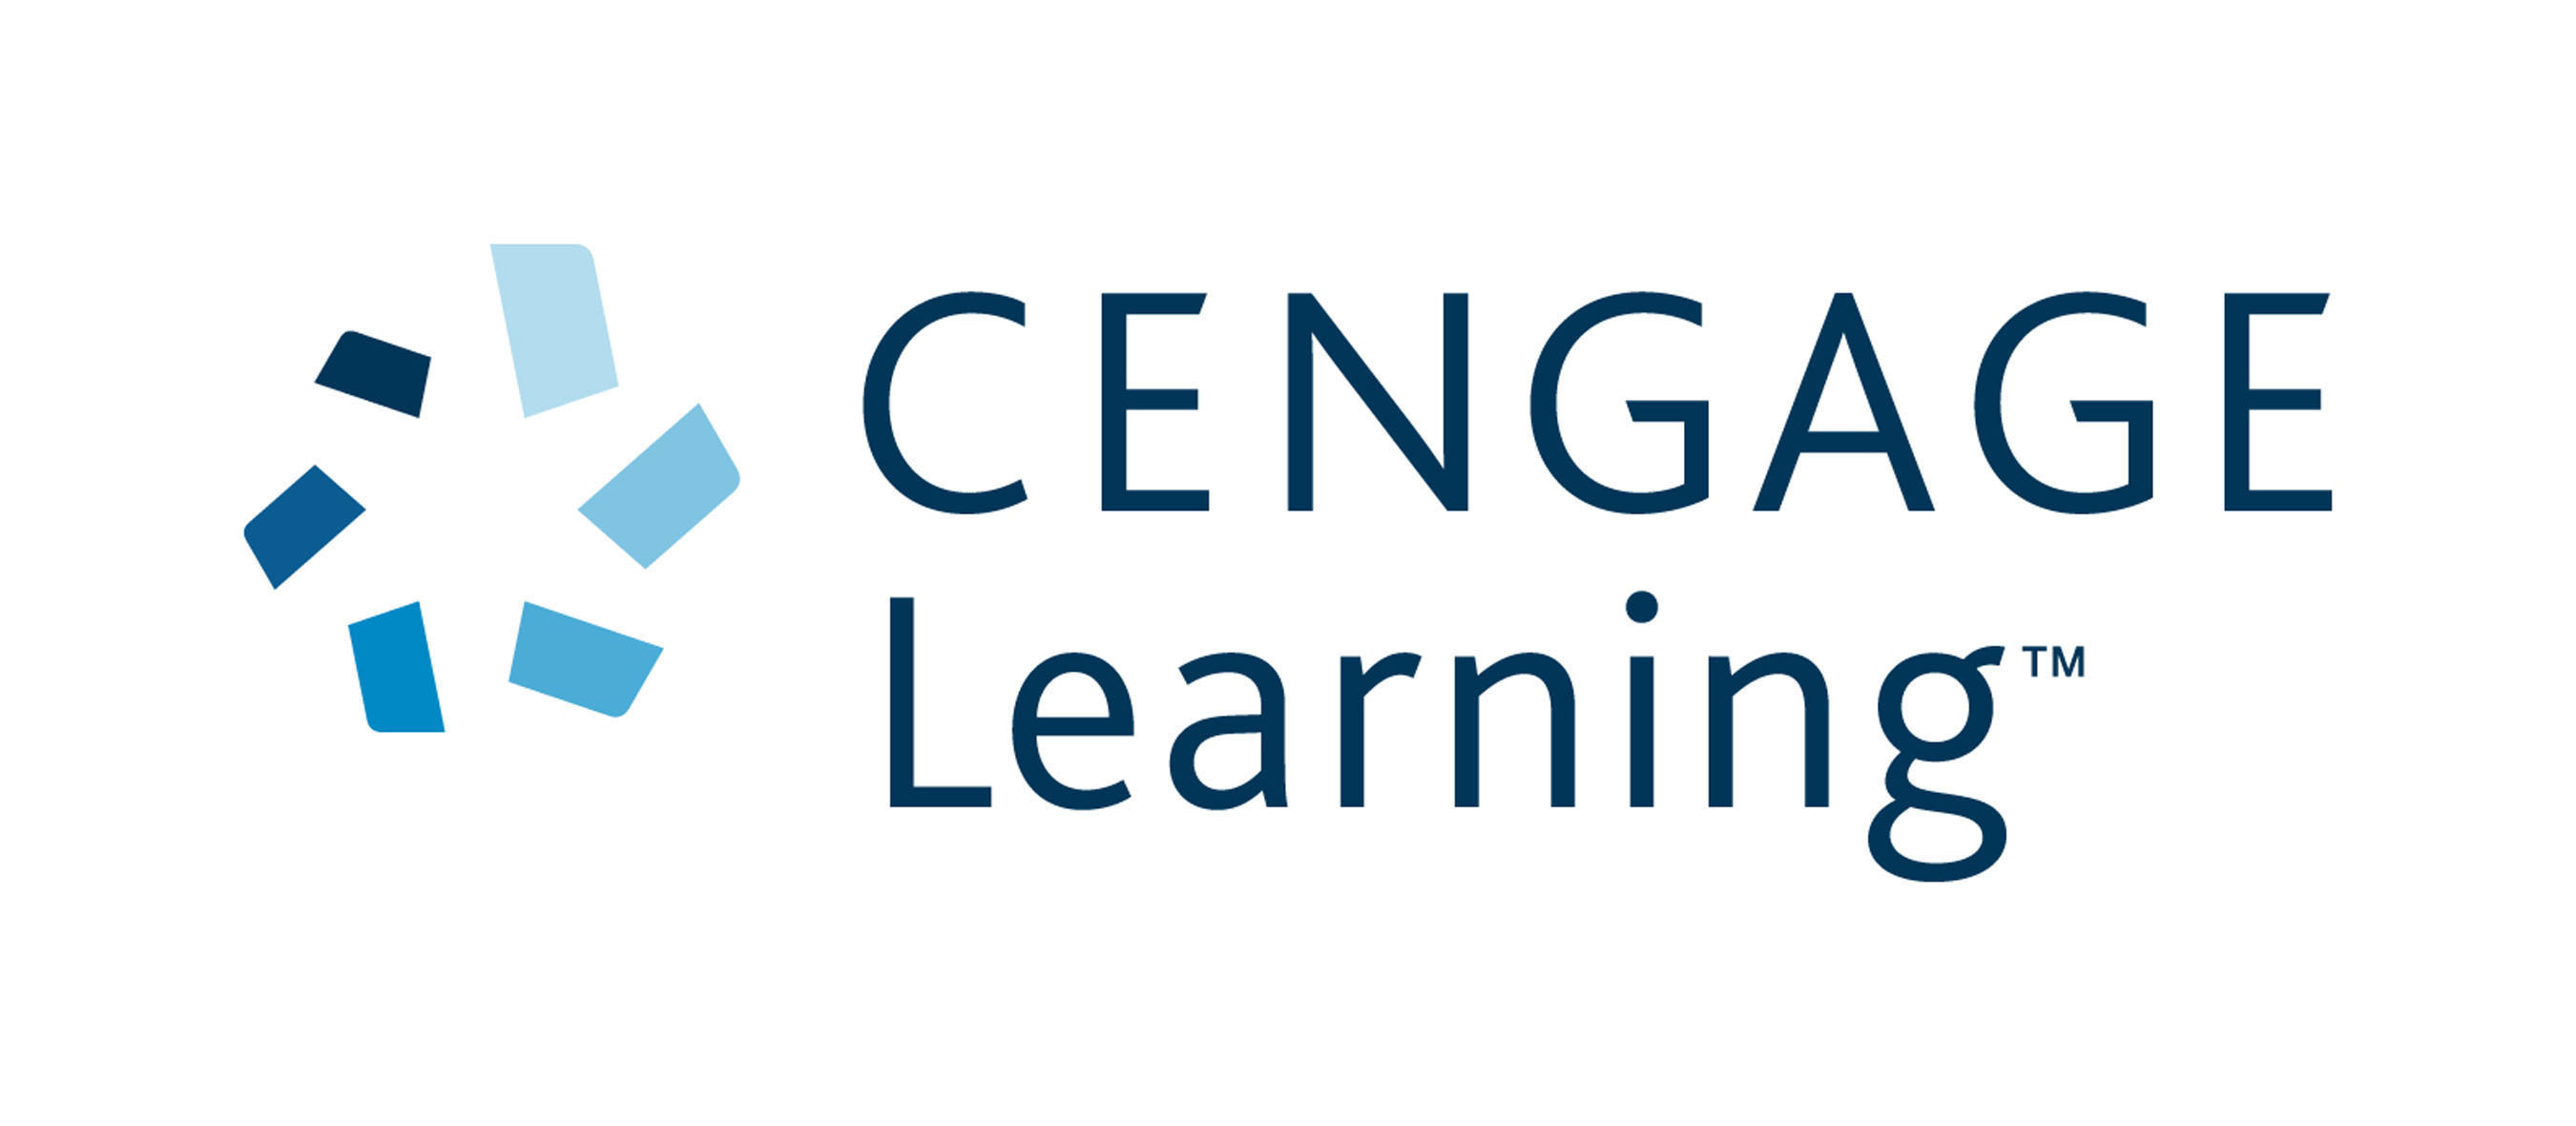 Cengage Learning Logo. (PRNewsFoto/Cengage Learning)